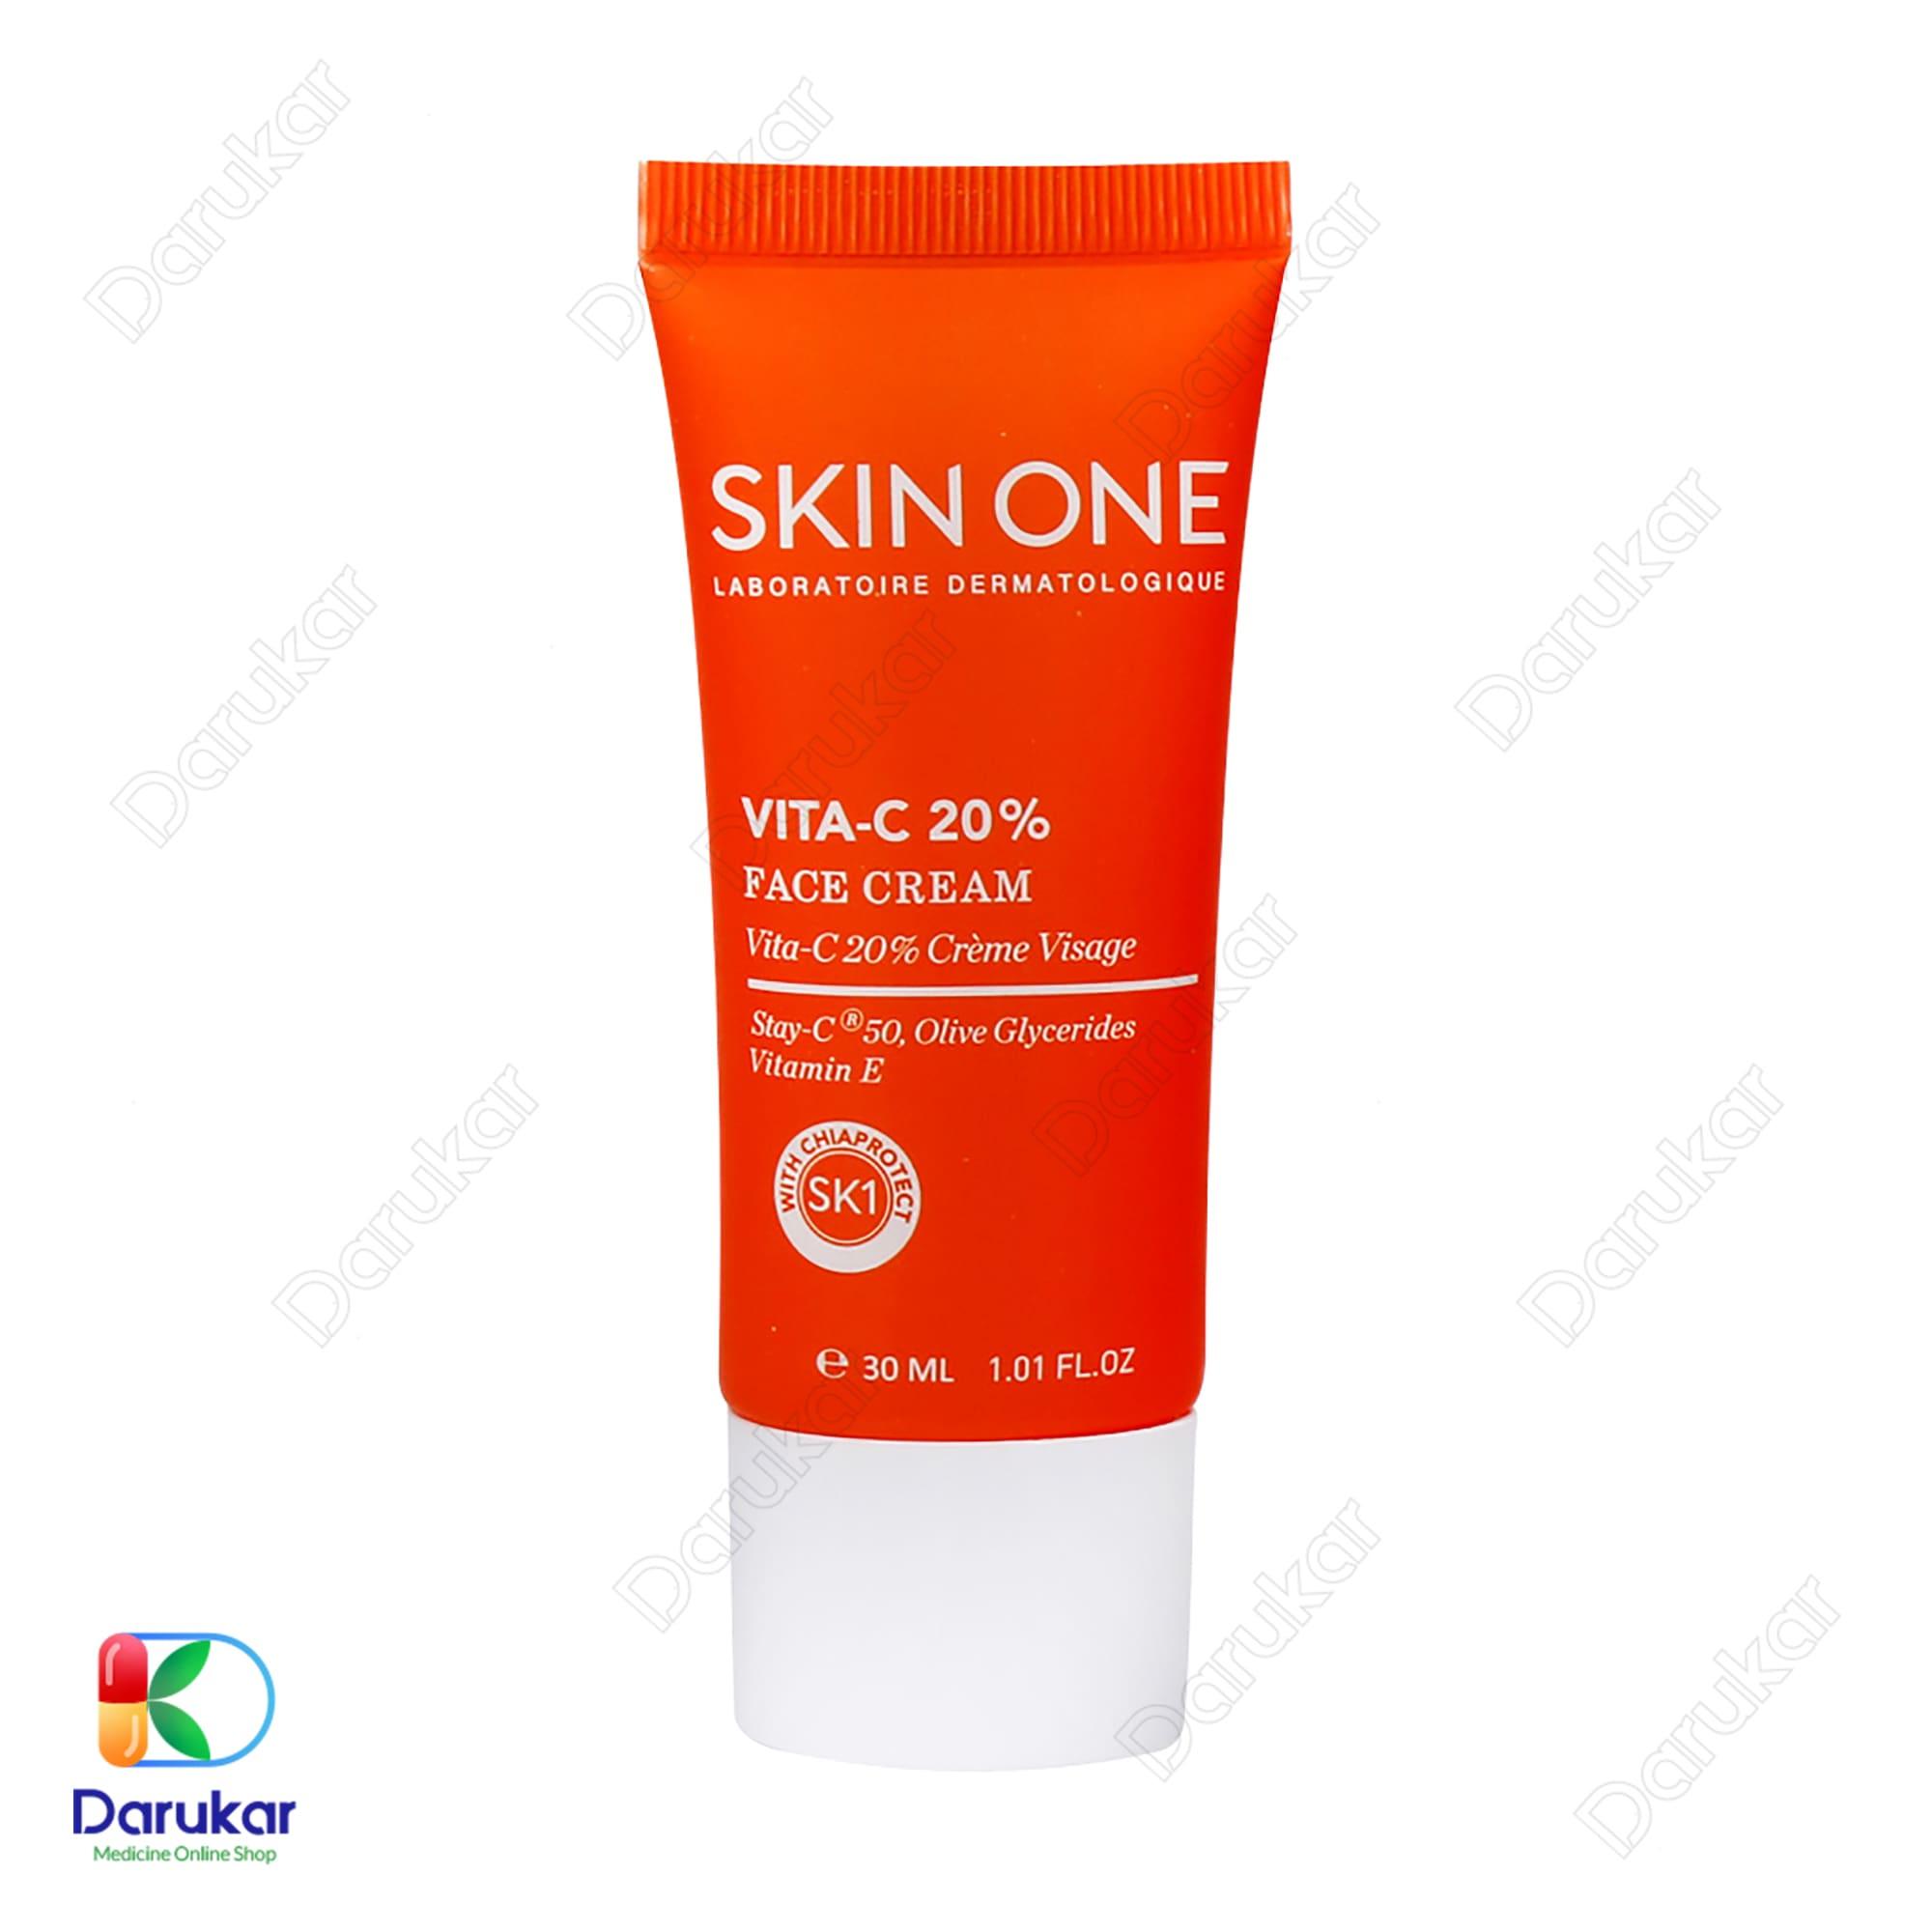 Skin One Vita C 20 Face Cream 30 ml 1